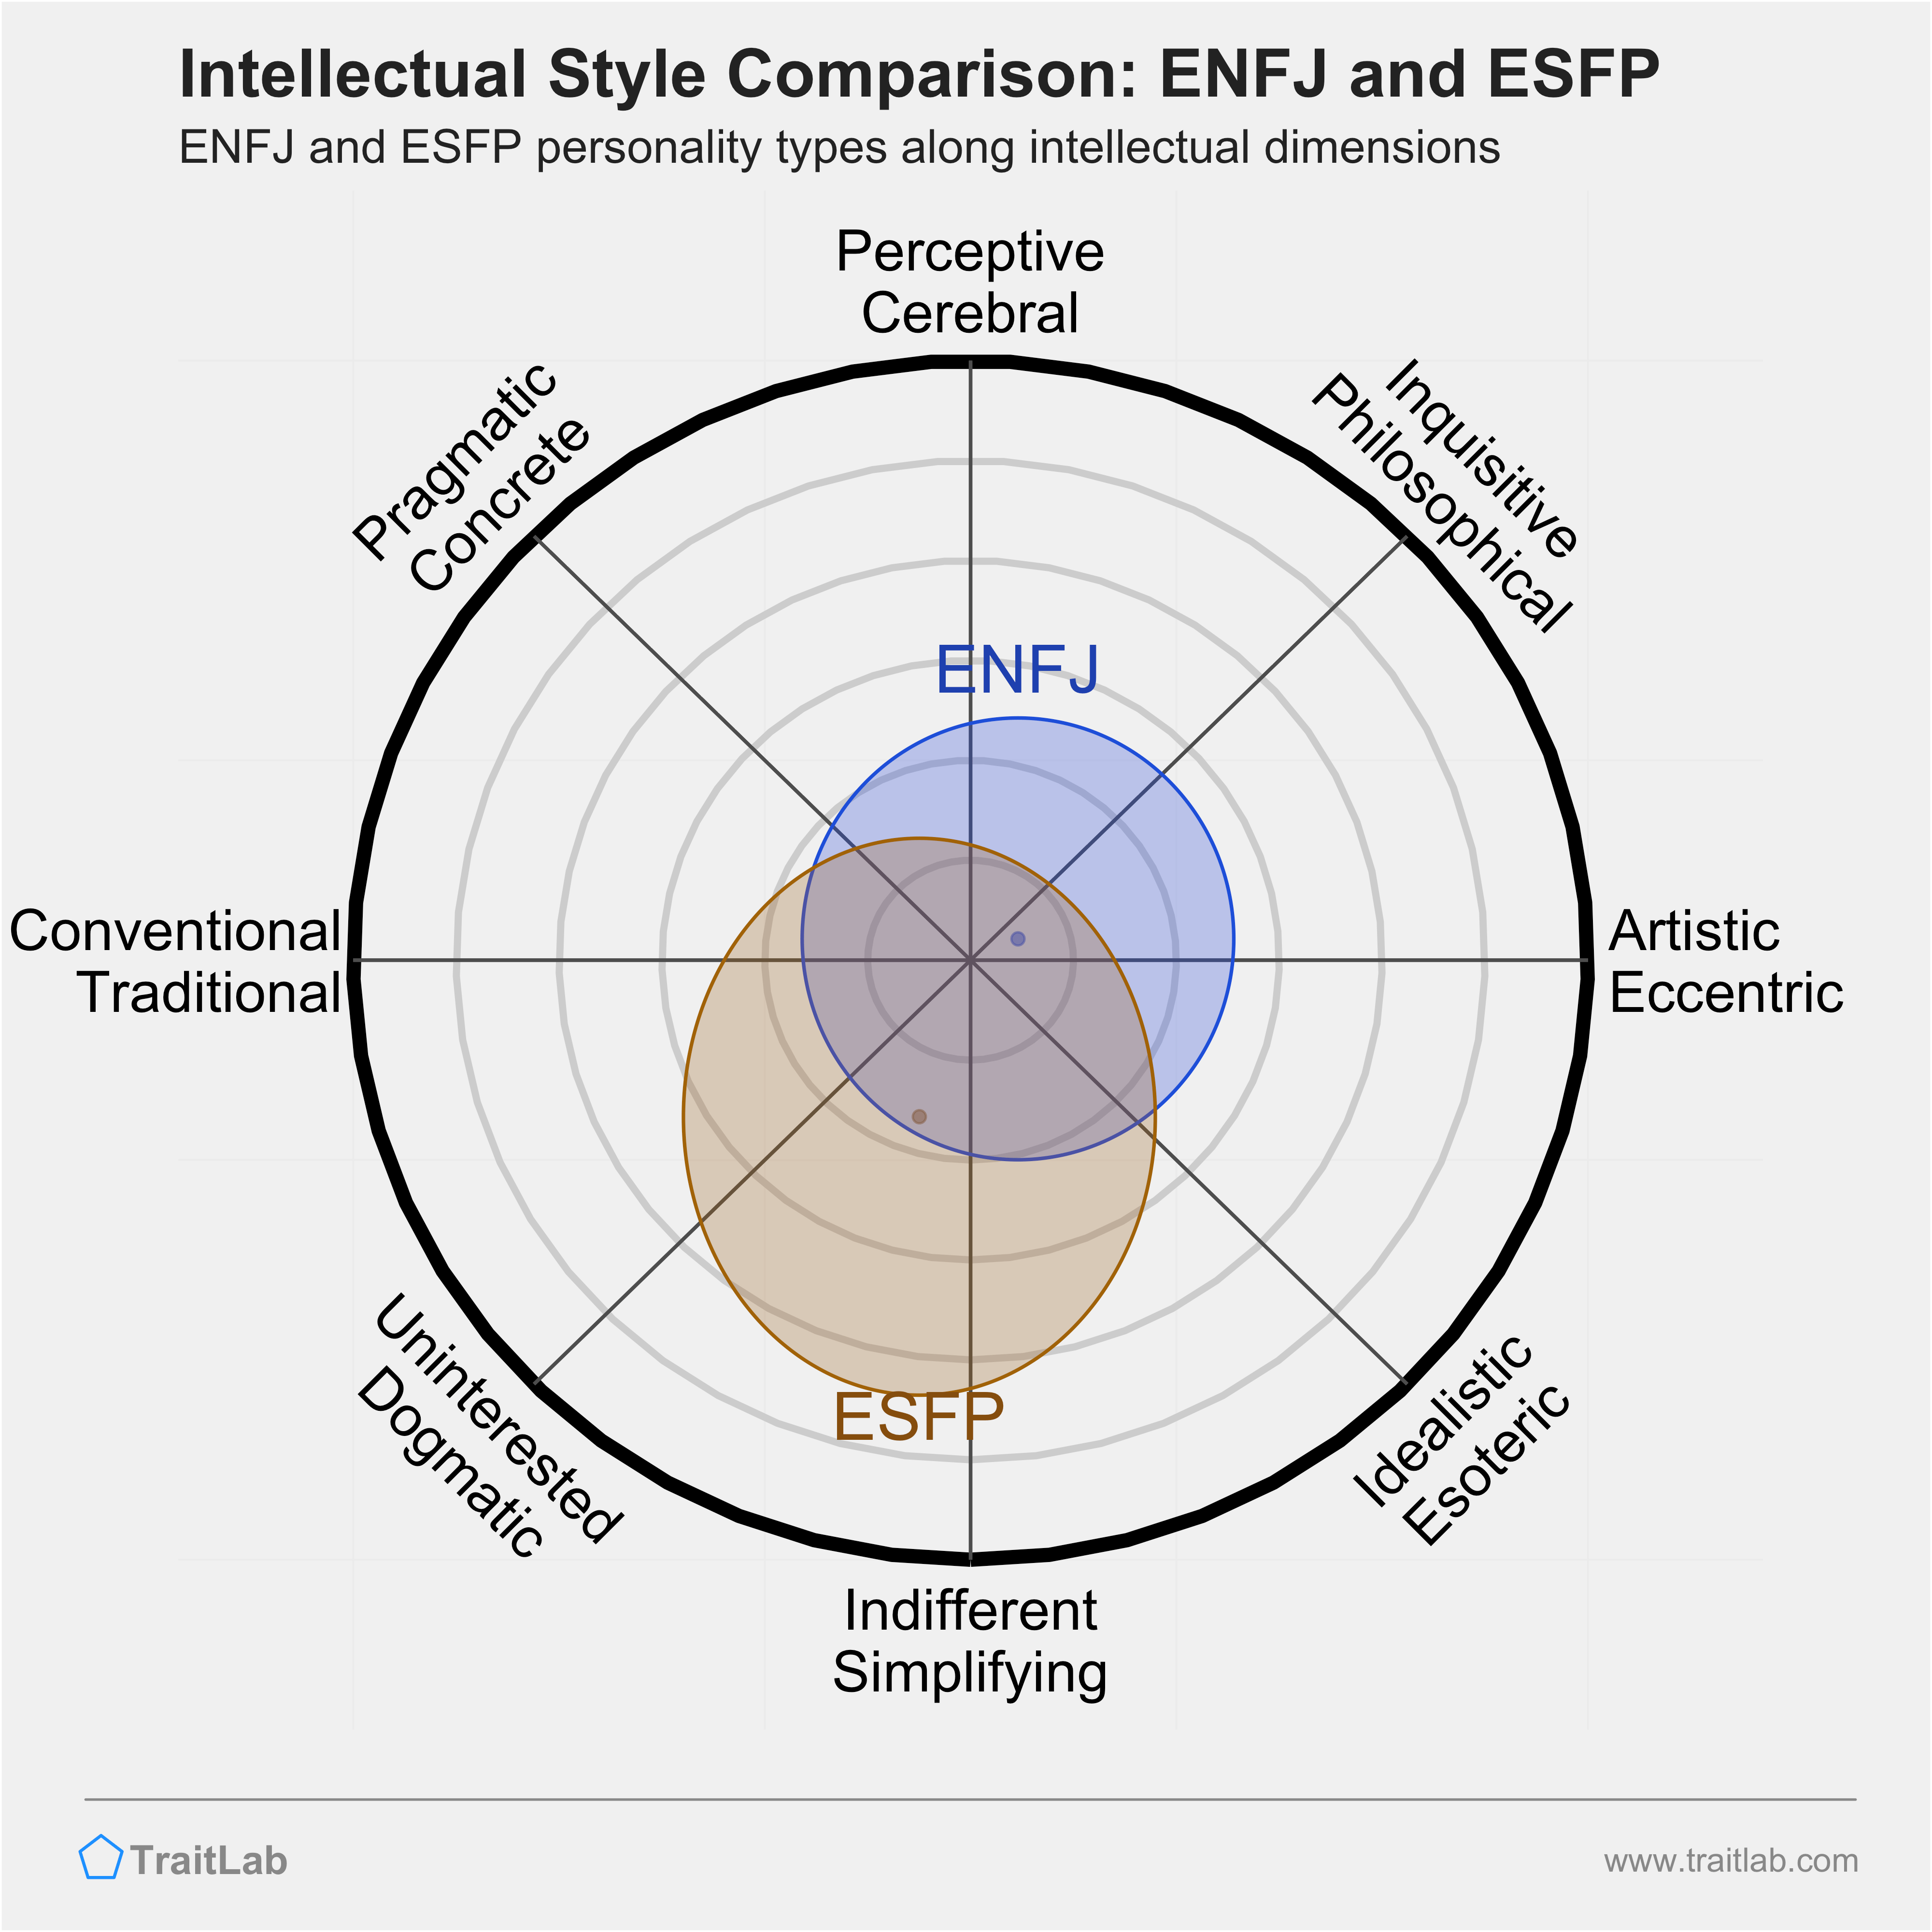 ENFJ and ESFP comparison across intellectual dimensions